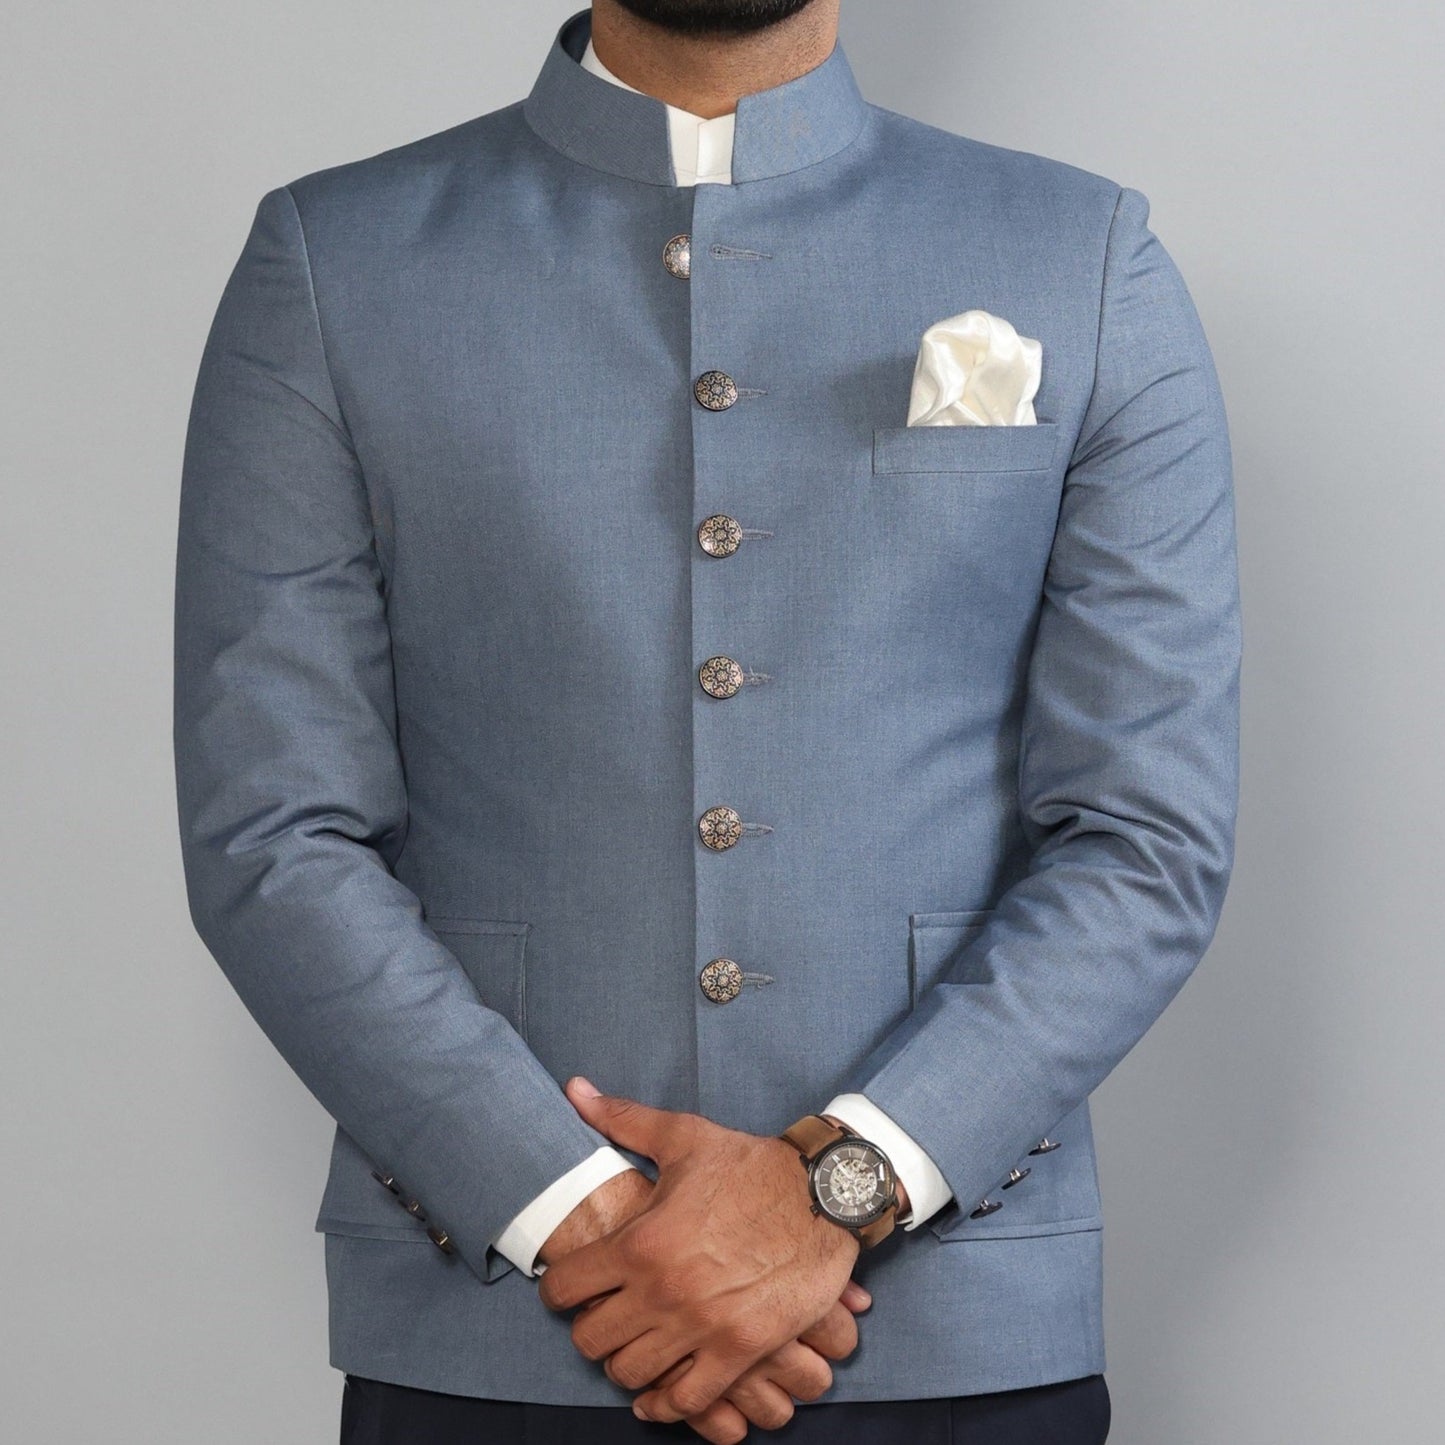 Denim Grey Jodhpuri Blazer with  Black Trouser| Perfect for Wedding and Casual wear|